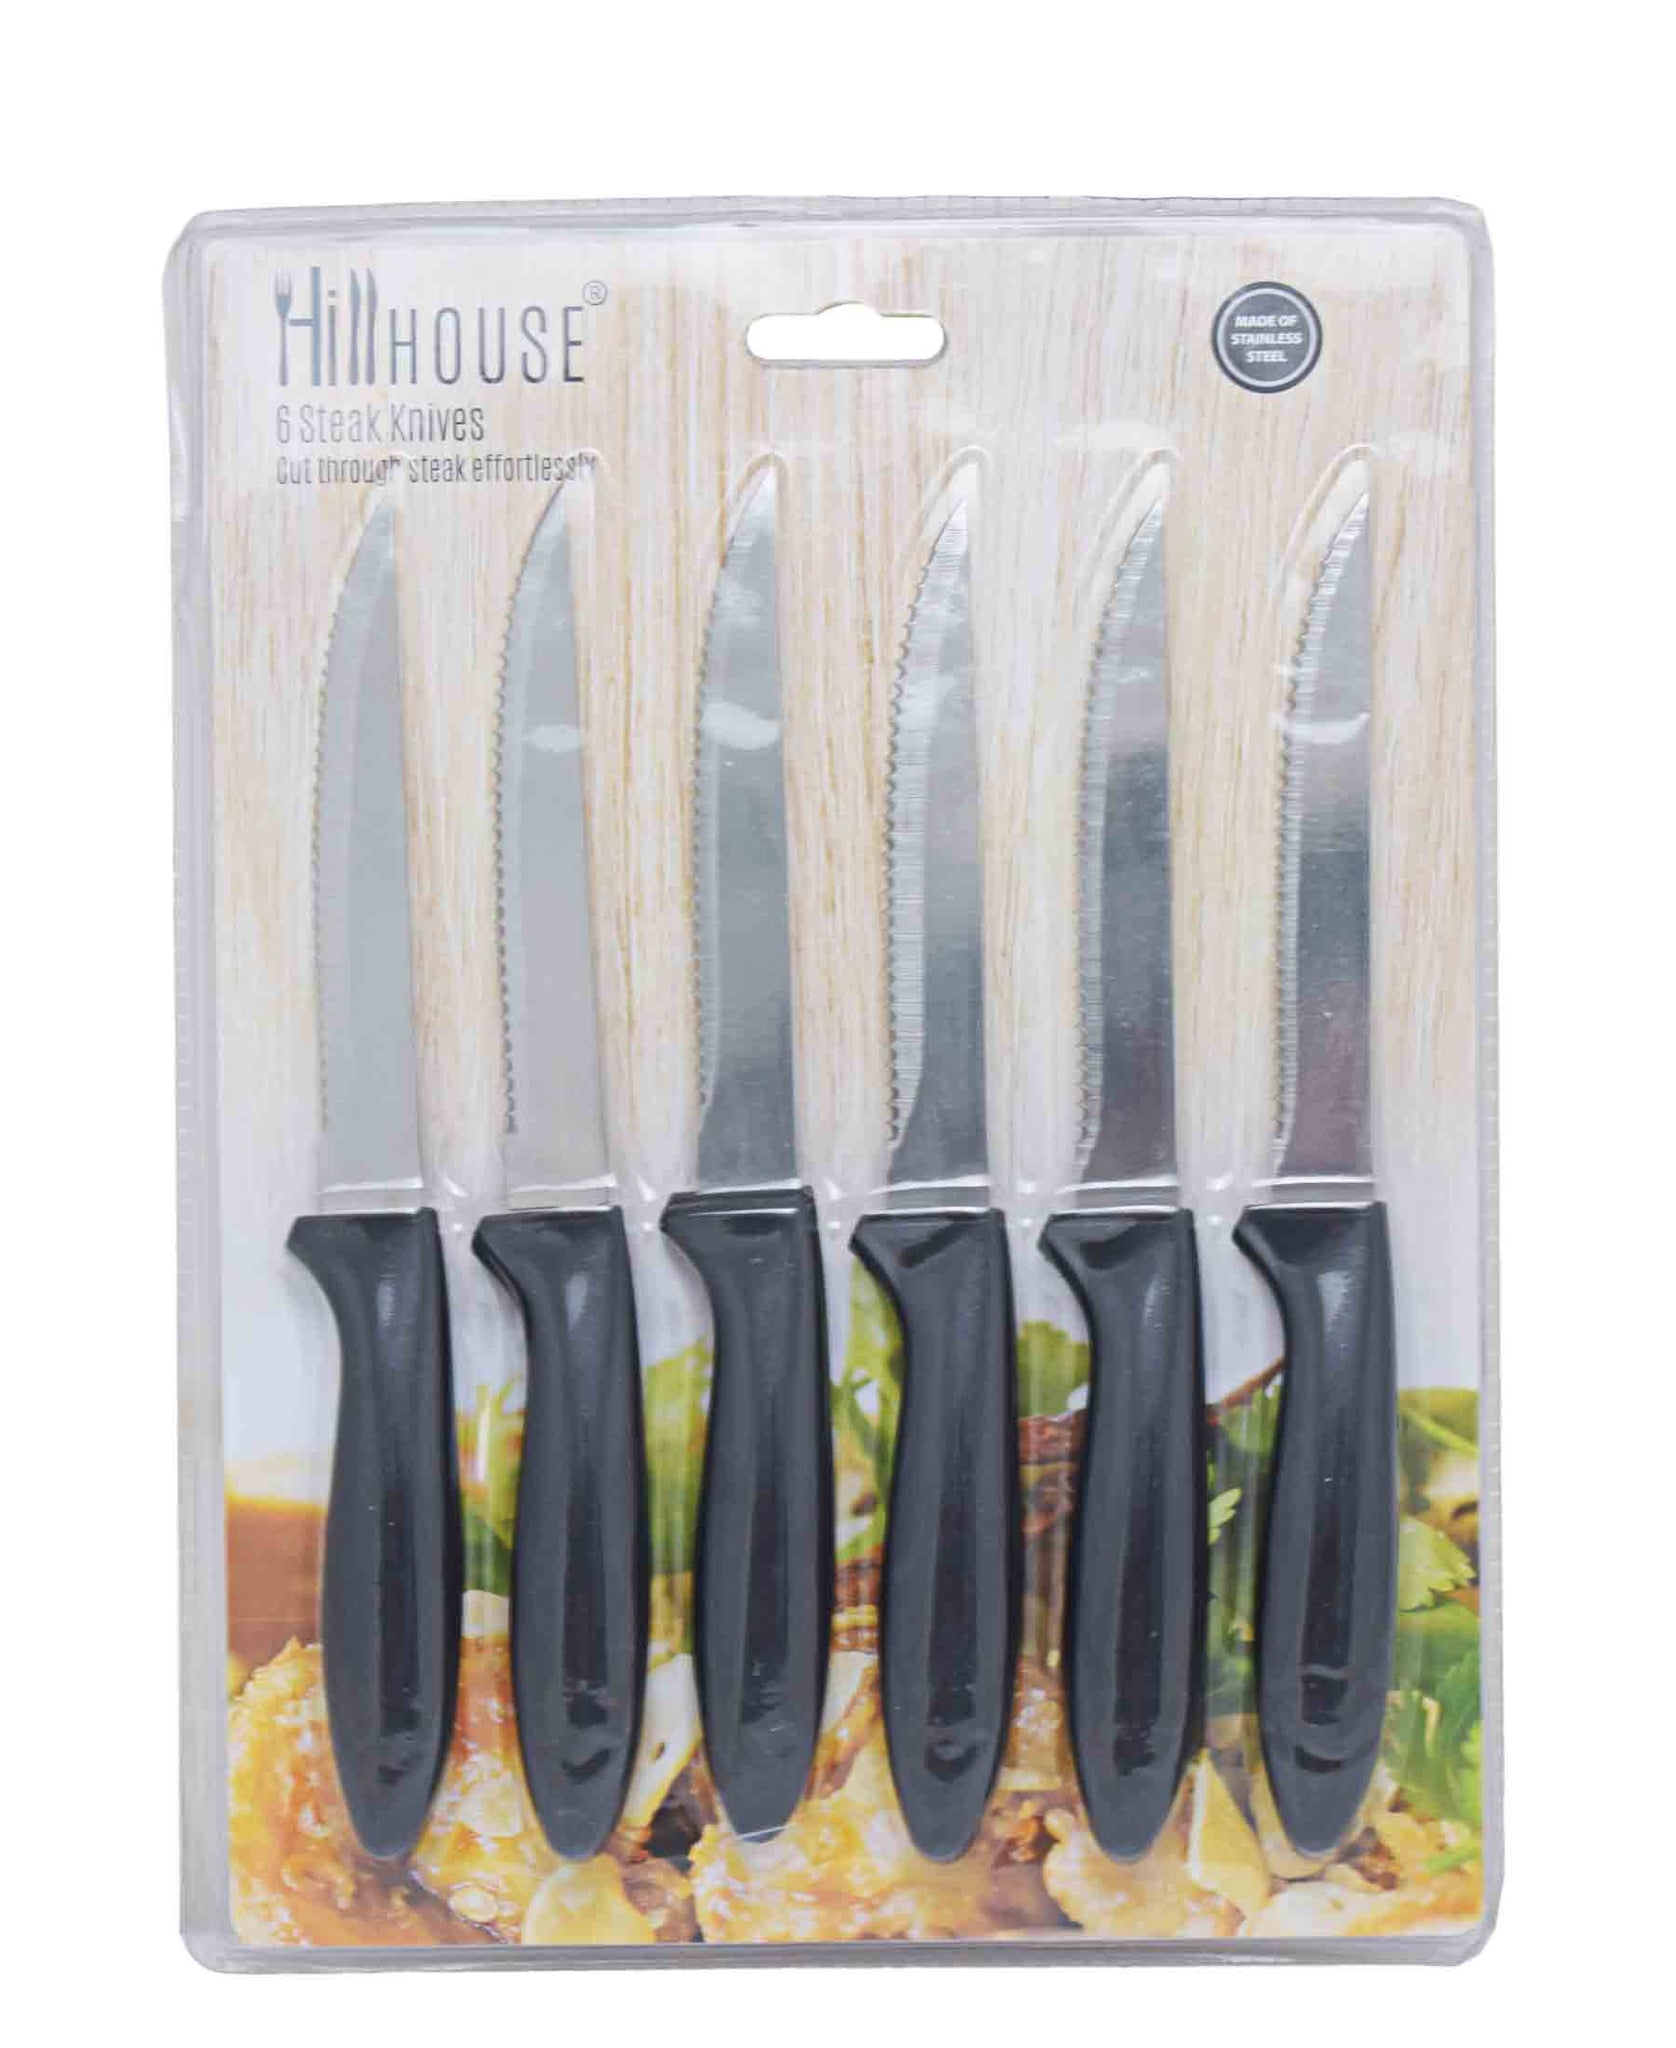 Hillhouse 6 Piece Steak Knife Set - Black & Silver